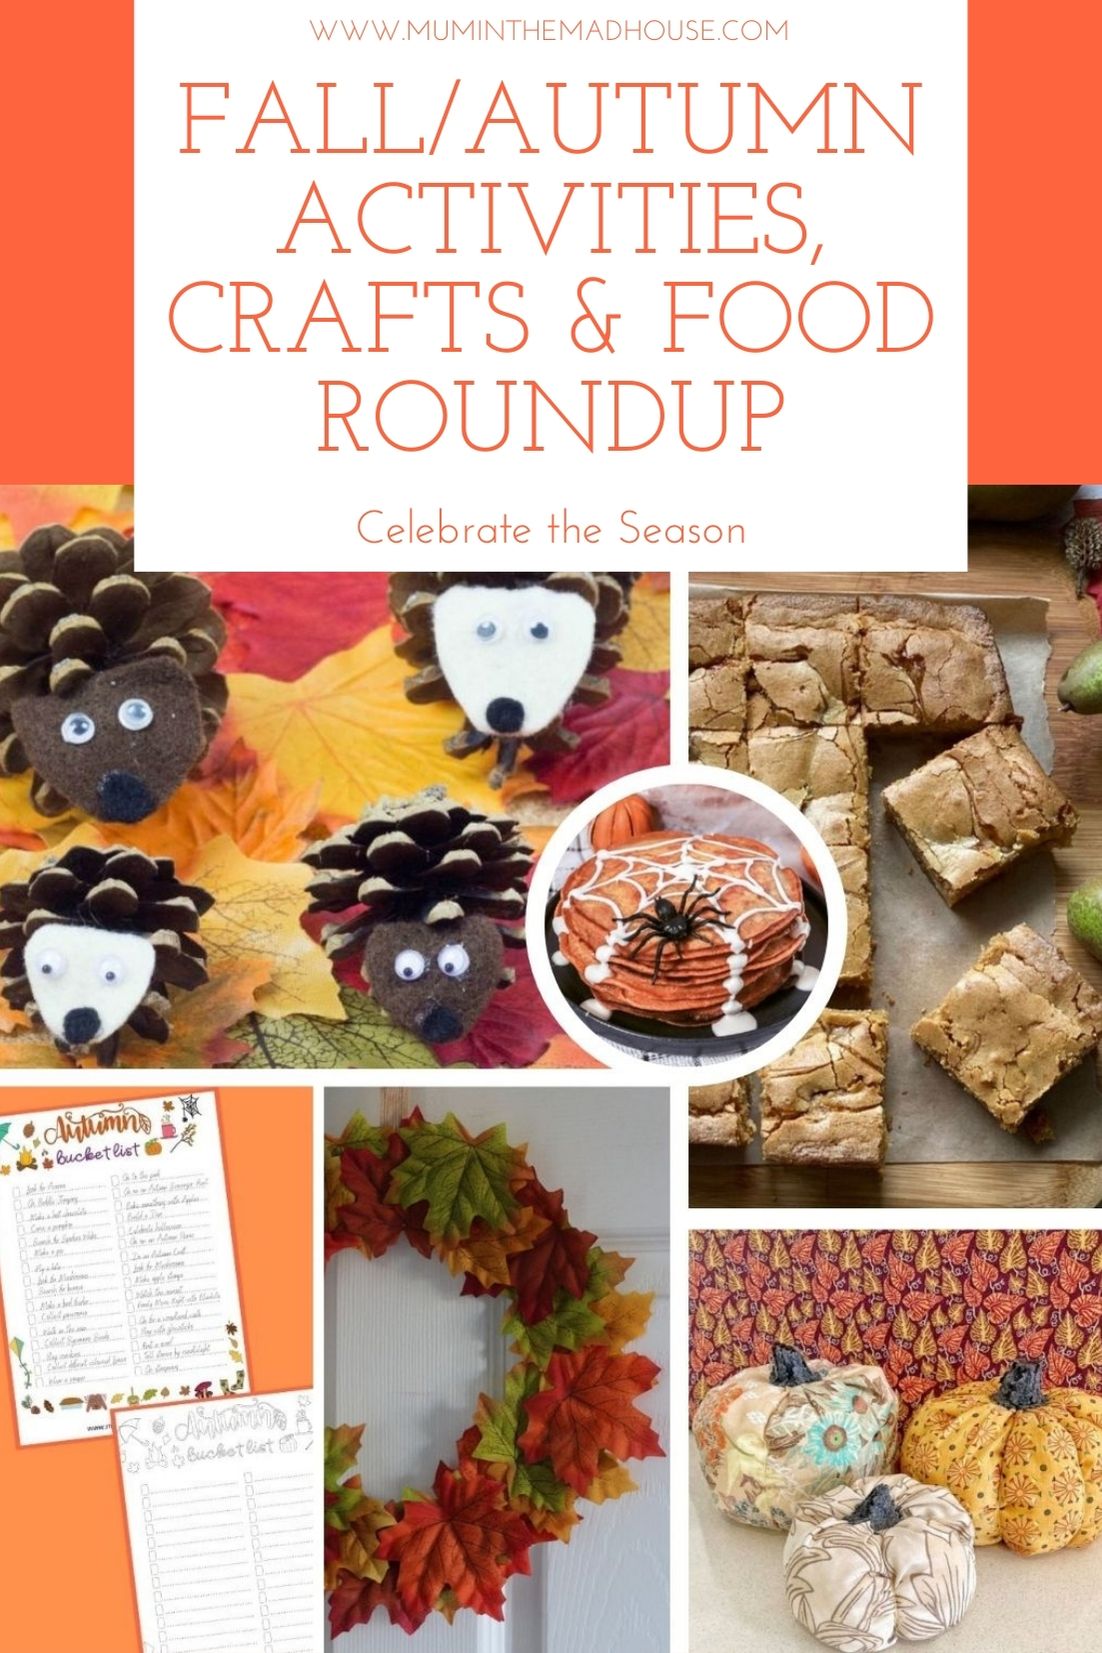 Fall/Autumn Activities, Crafts and Food Roundup